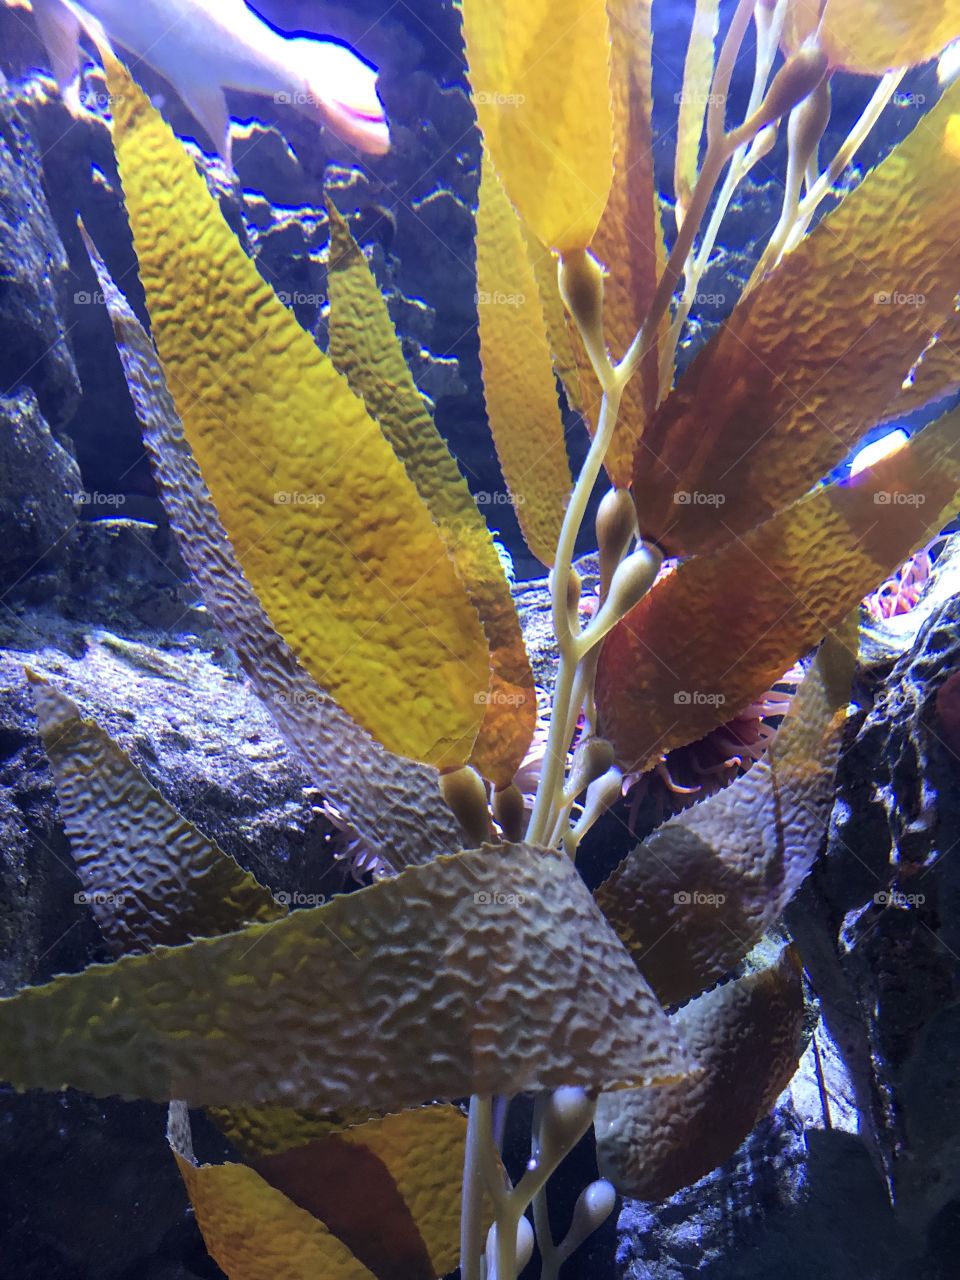 Seaweed from the aquarium in Boston 